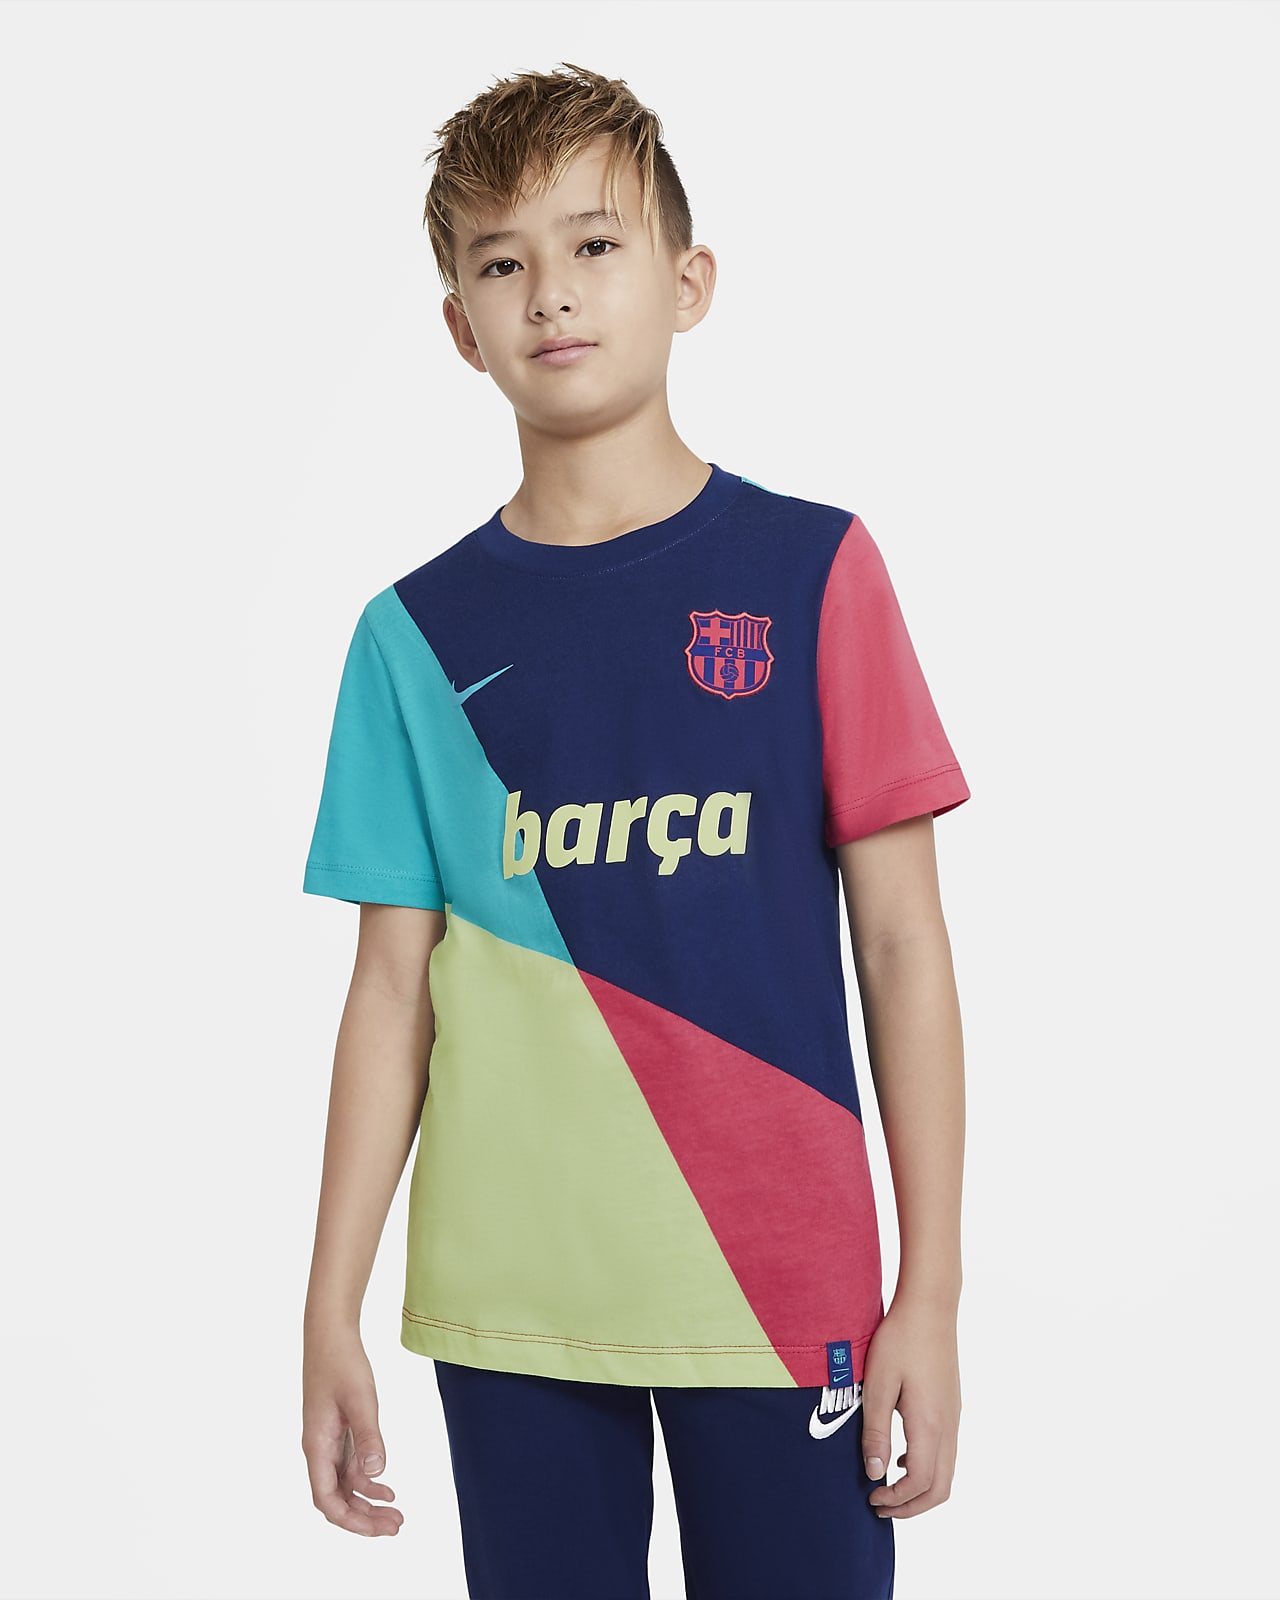 Barcelona Jersey 007 T-Shirt Details about   HKY FC Barcelona Official Jersey